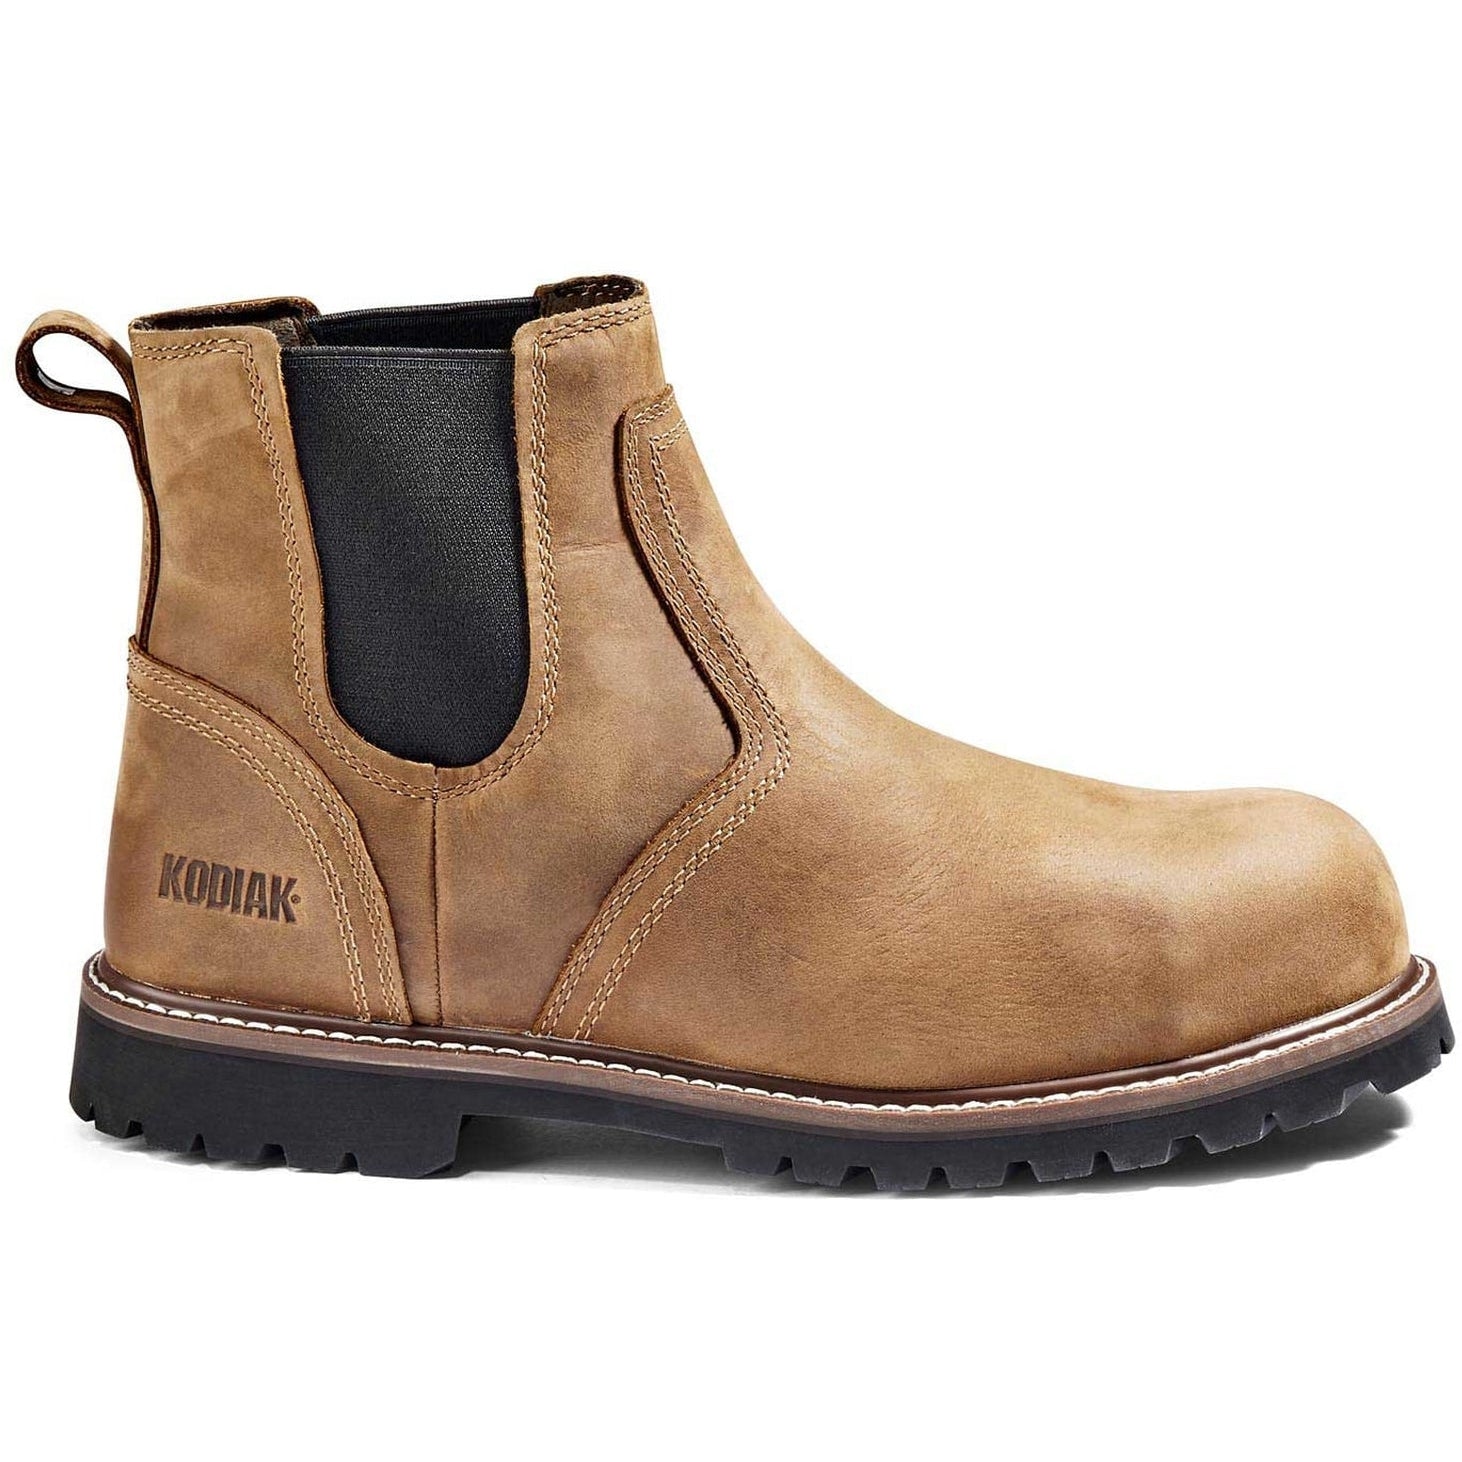 Kodiak Men's Mckinney Comp Toe WP Chelsea Safety Work Boot -Brown- K4TCBN 7 / Wide / Brown - Overlook Boots